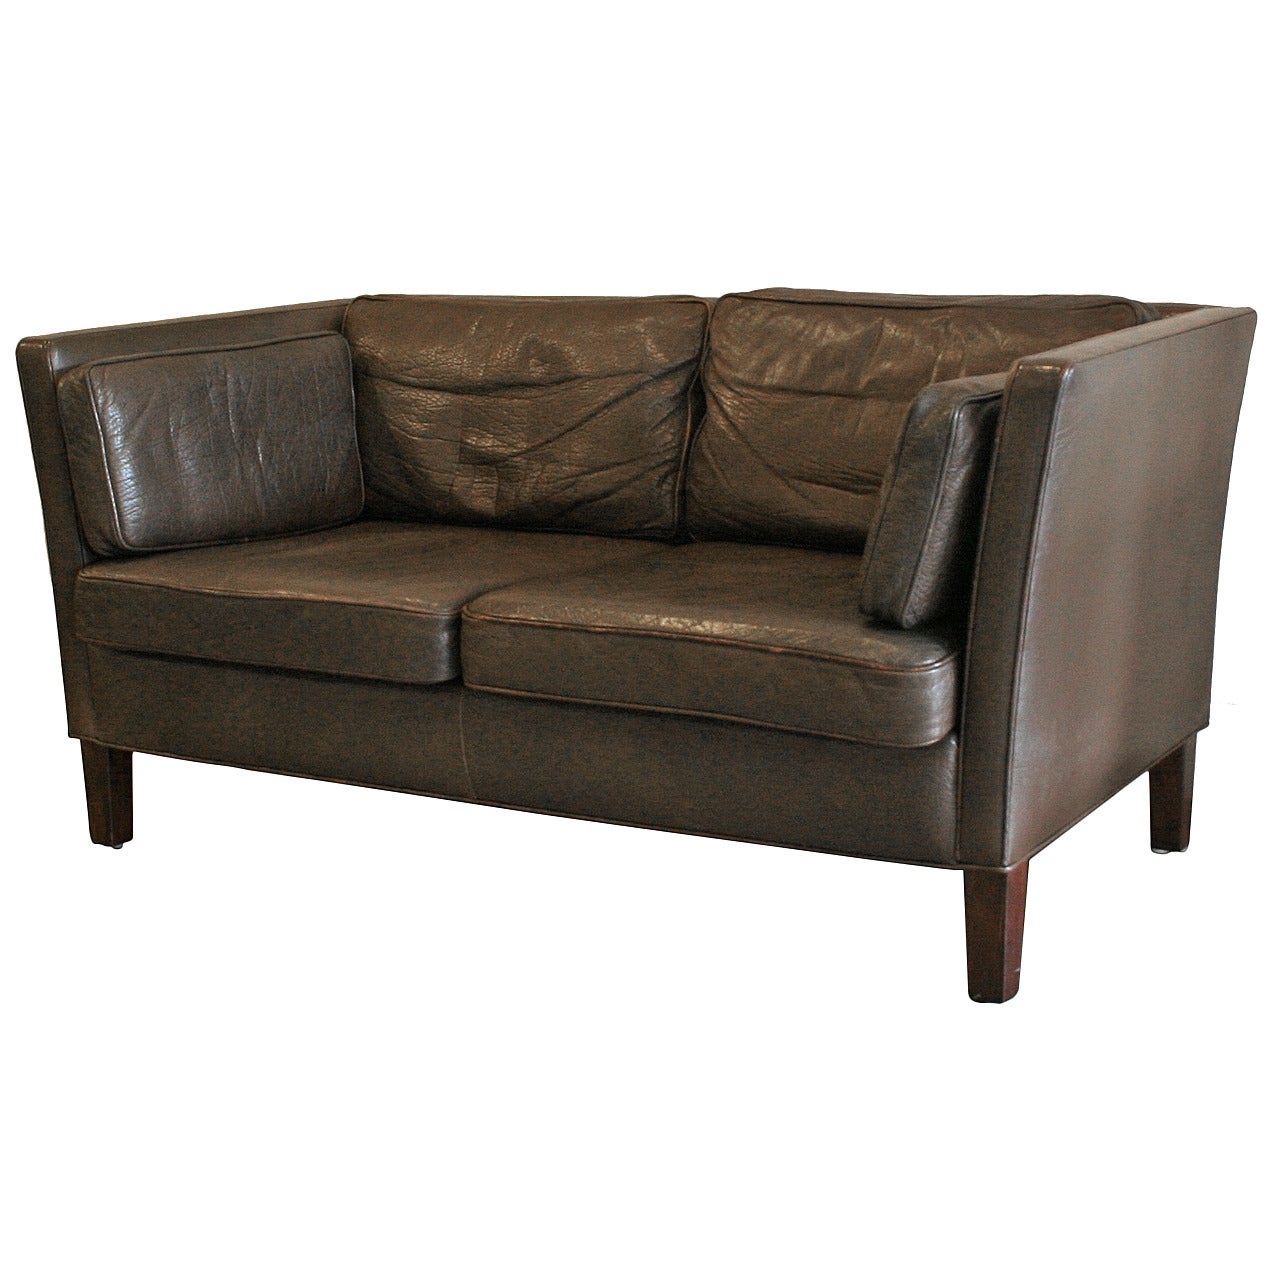 1960s Danish Leather Two-Seat Sofa